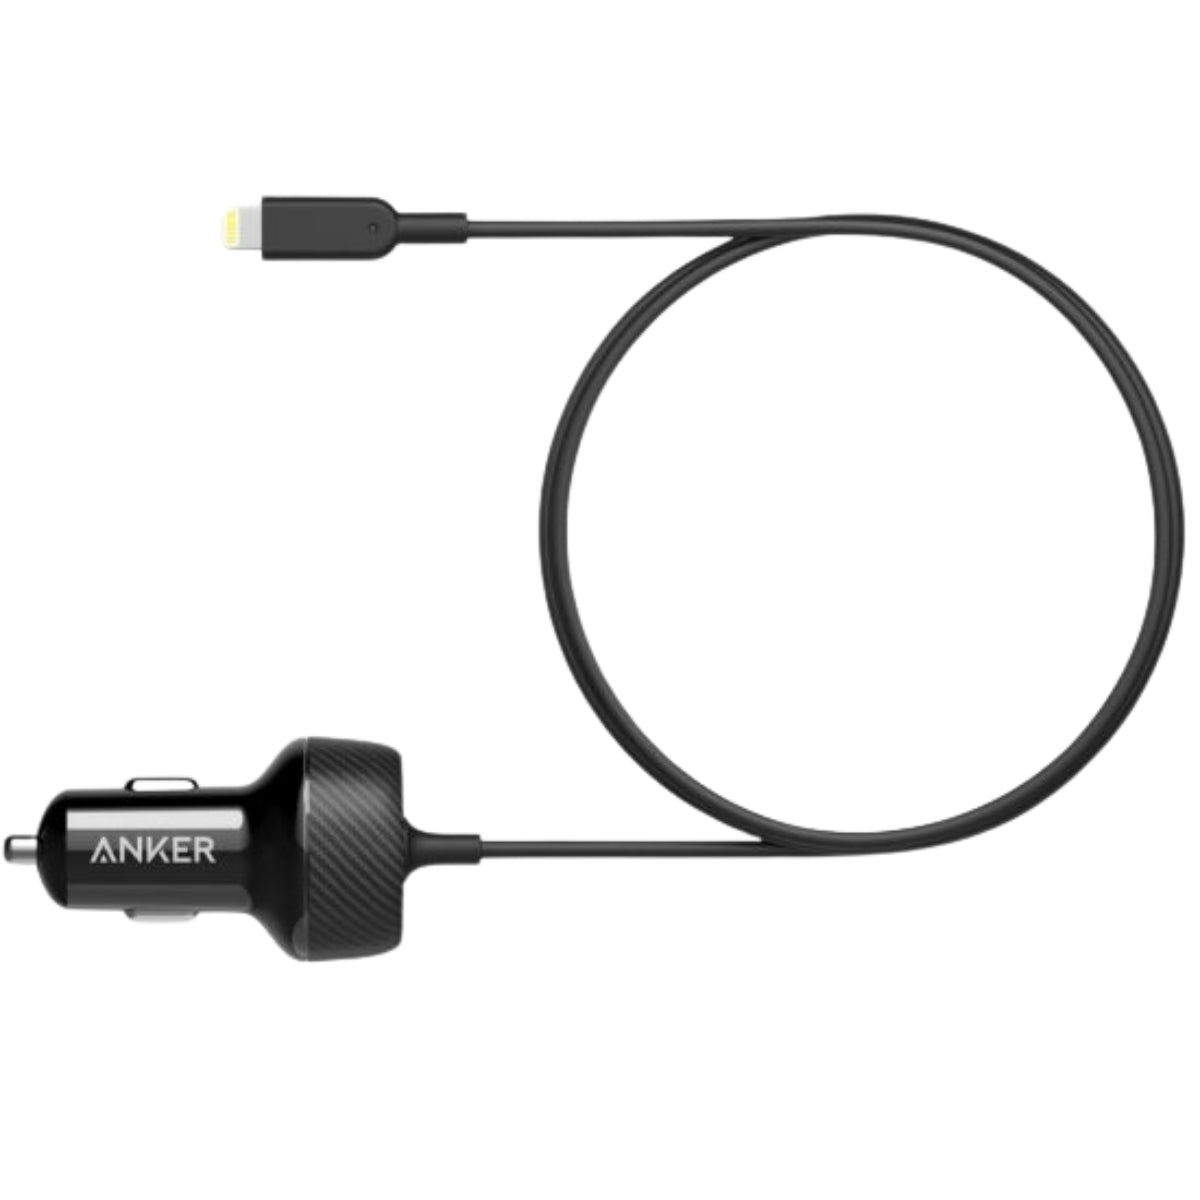  Anker  Elite USB Port+Lightning Cable24W